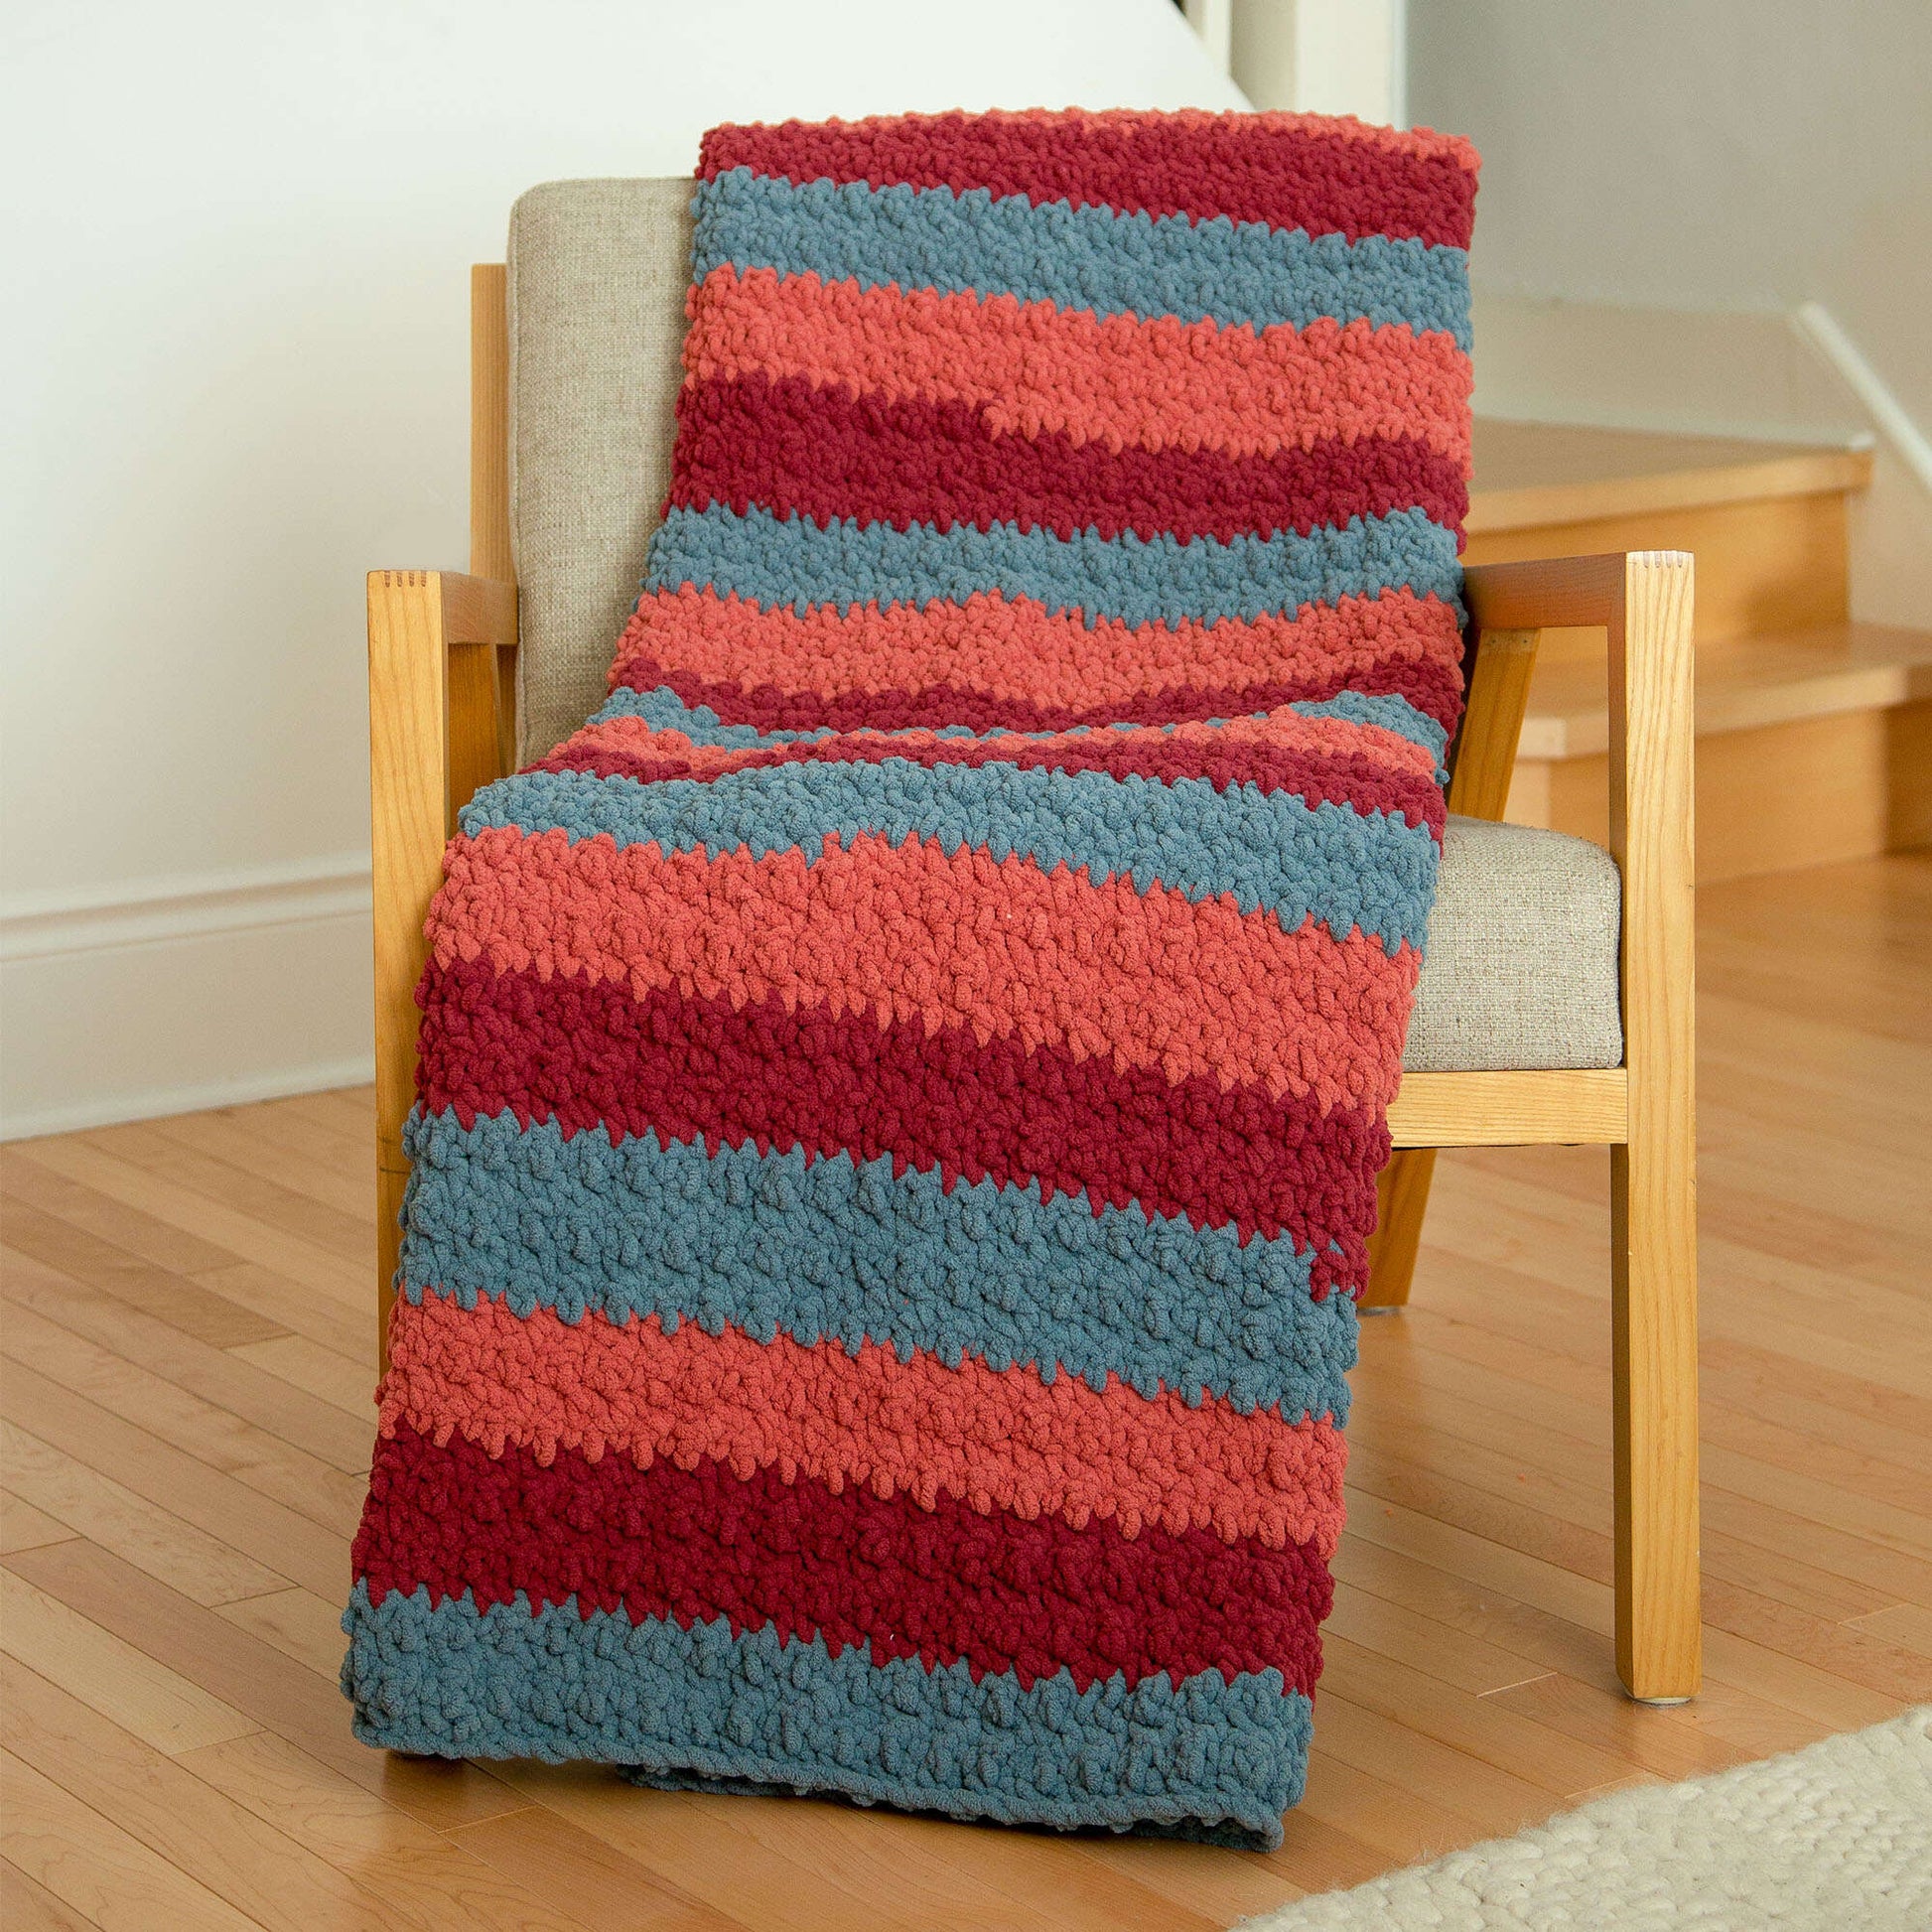 Free Bernat Color-Blocked Crochet Textured Knit Blanket Pattern